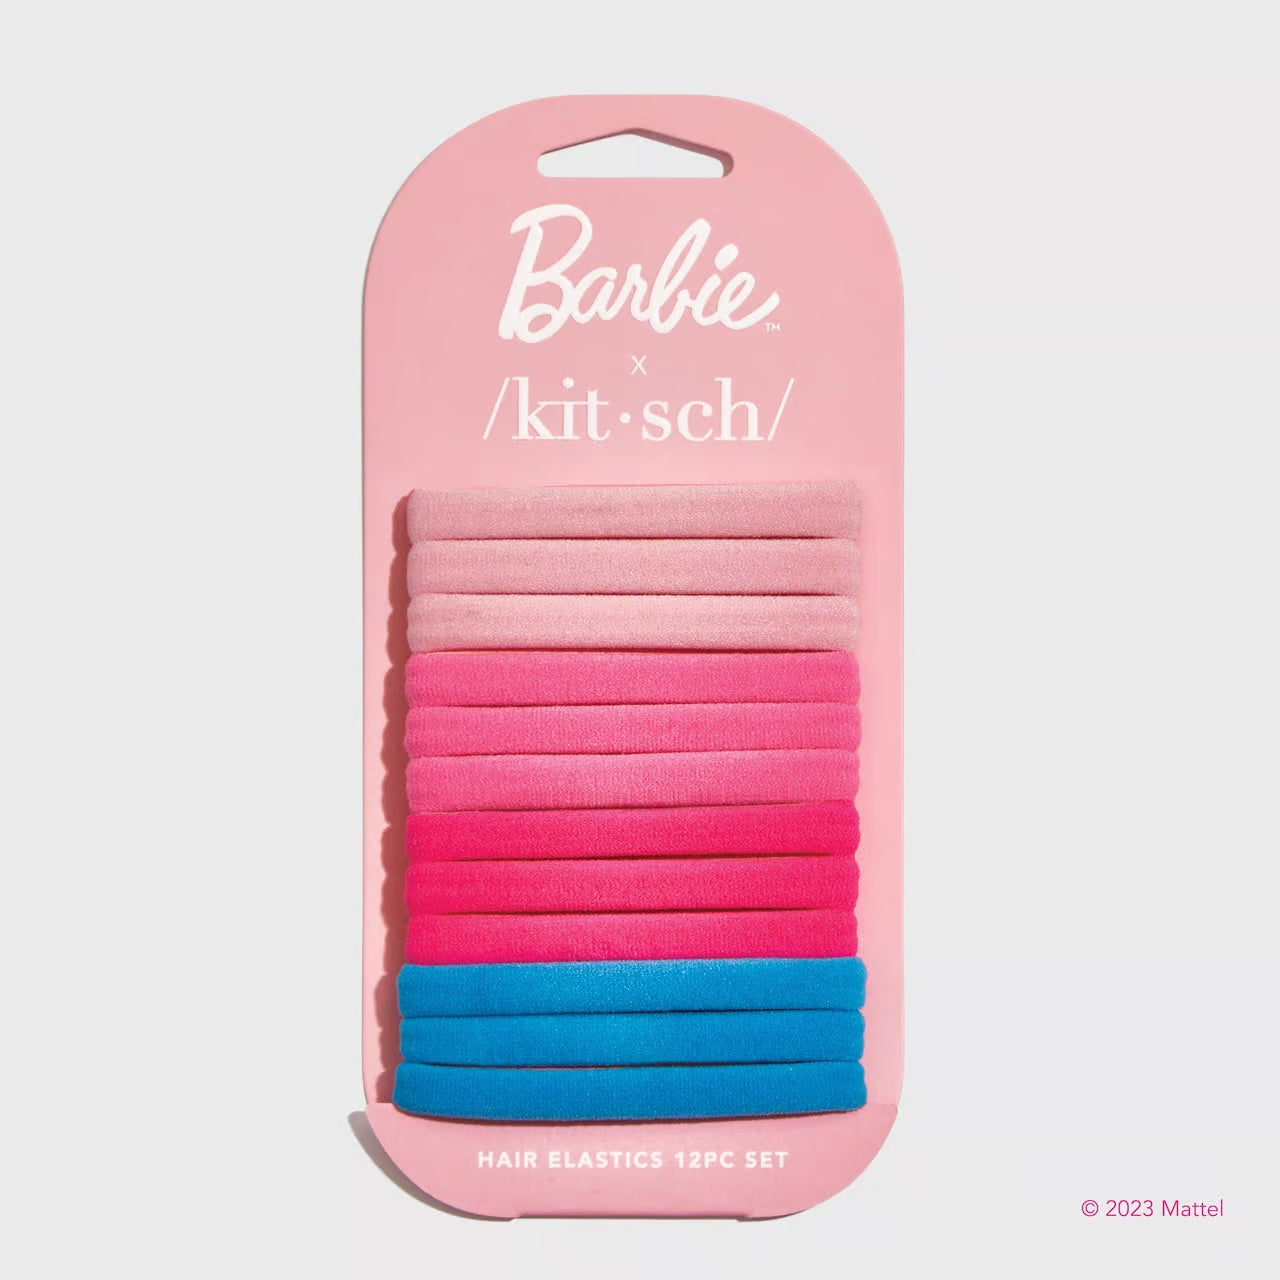 Barbie x Kitsch Recycled Nylon Elastics 12pc